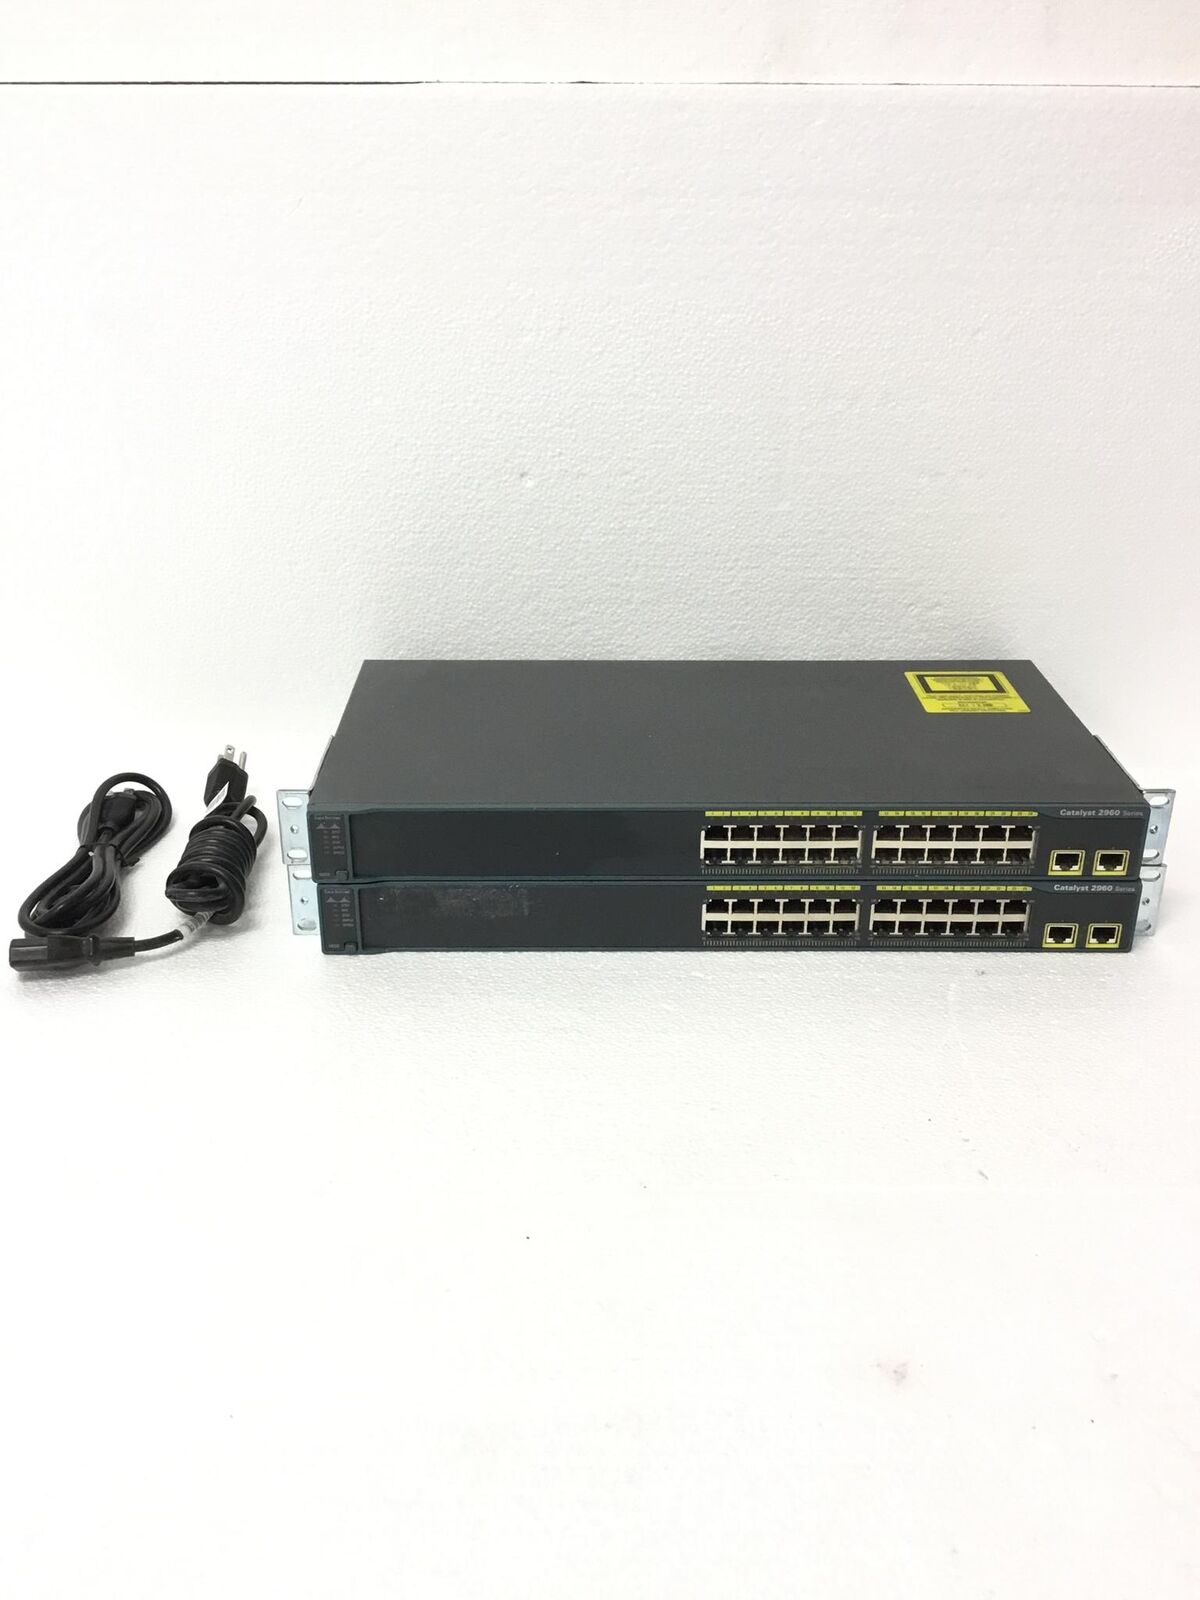 4x Cisco WS-C2960-24TT-L Catalyst 2960 24-Port 10/100 Ethernet Network Switch